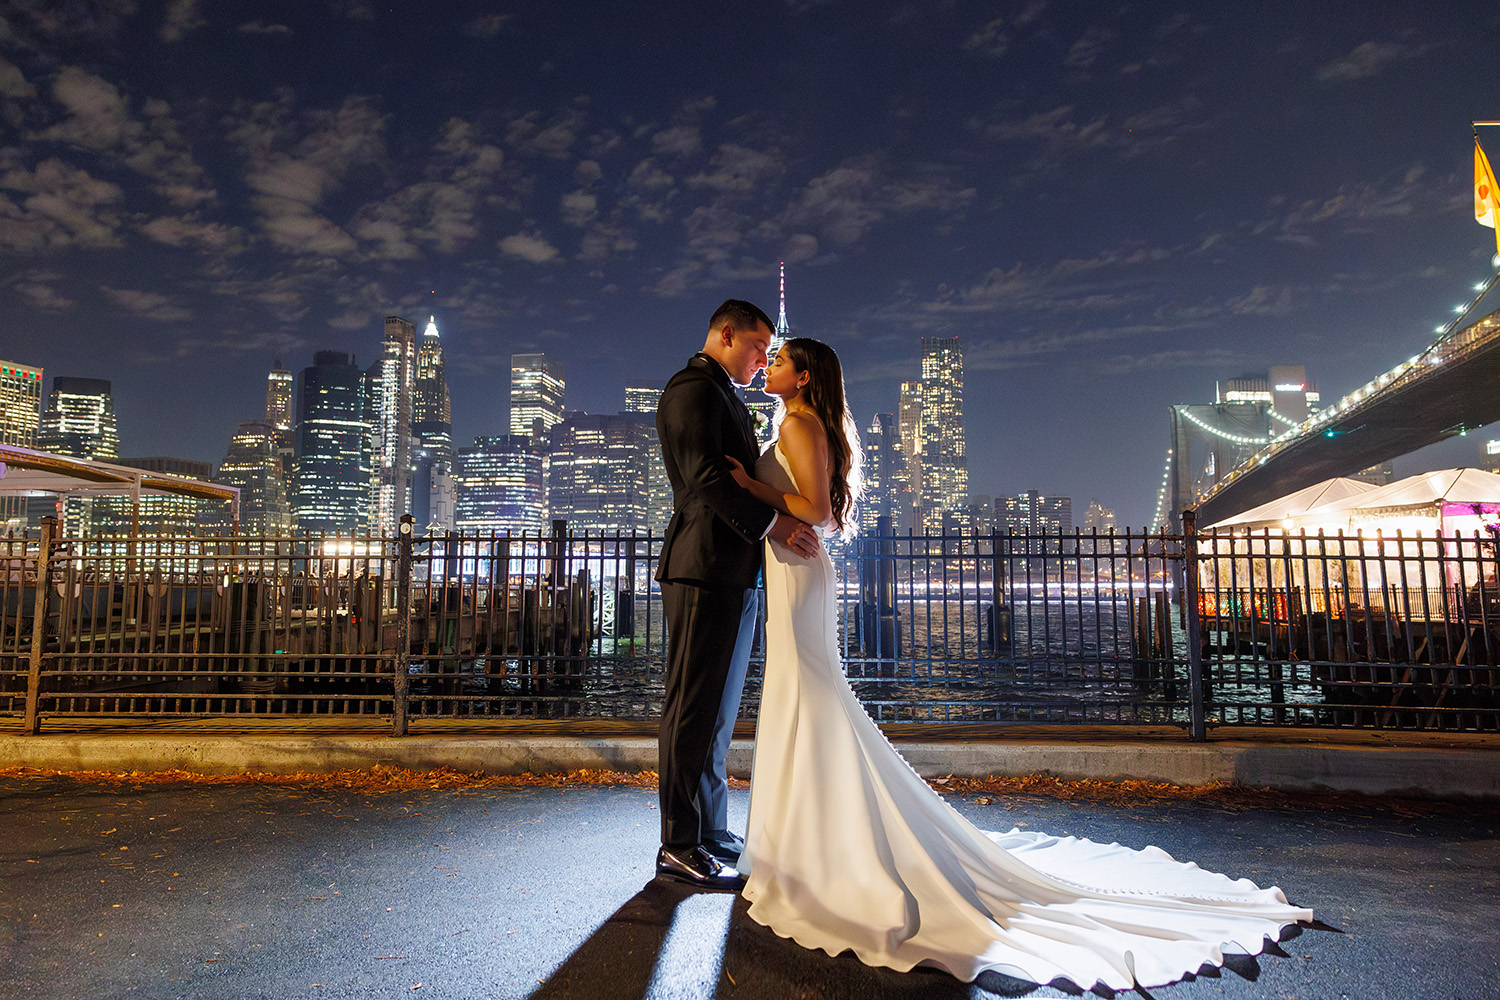 Wedding photographer New York City